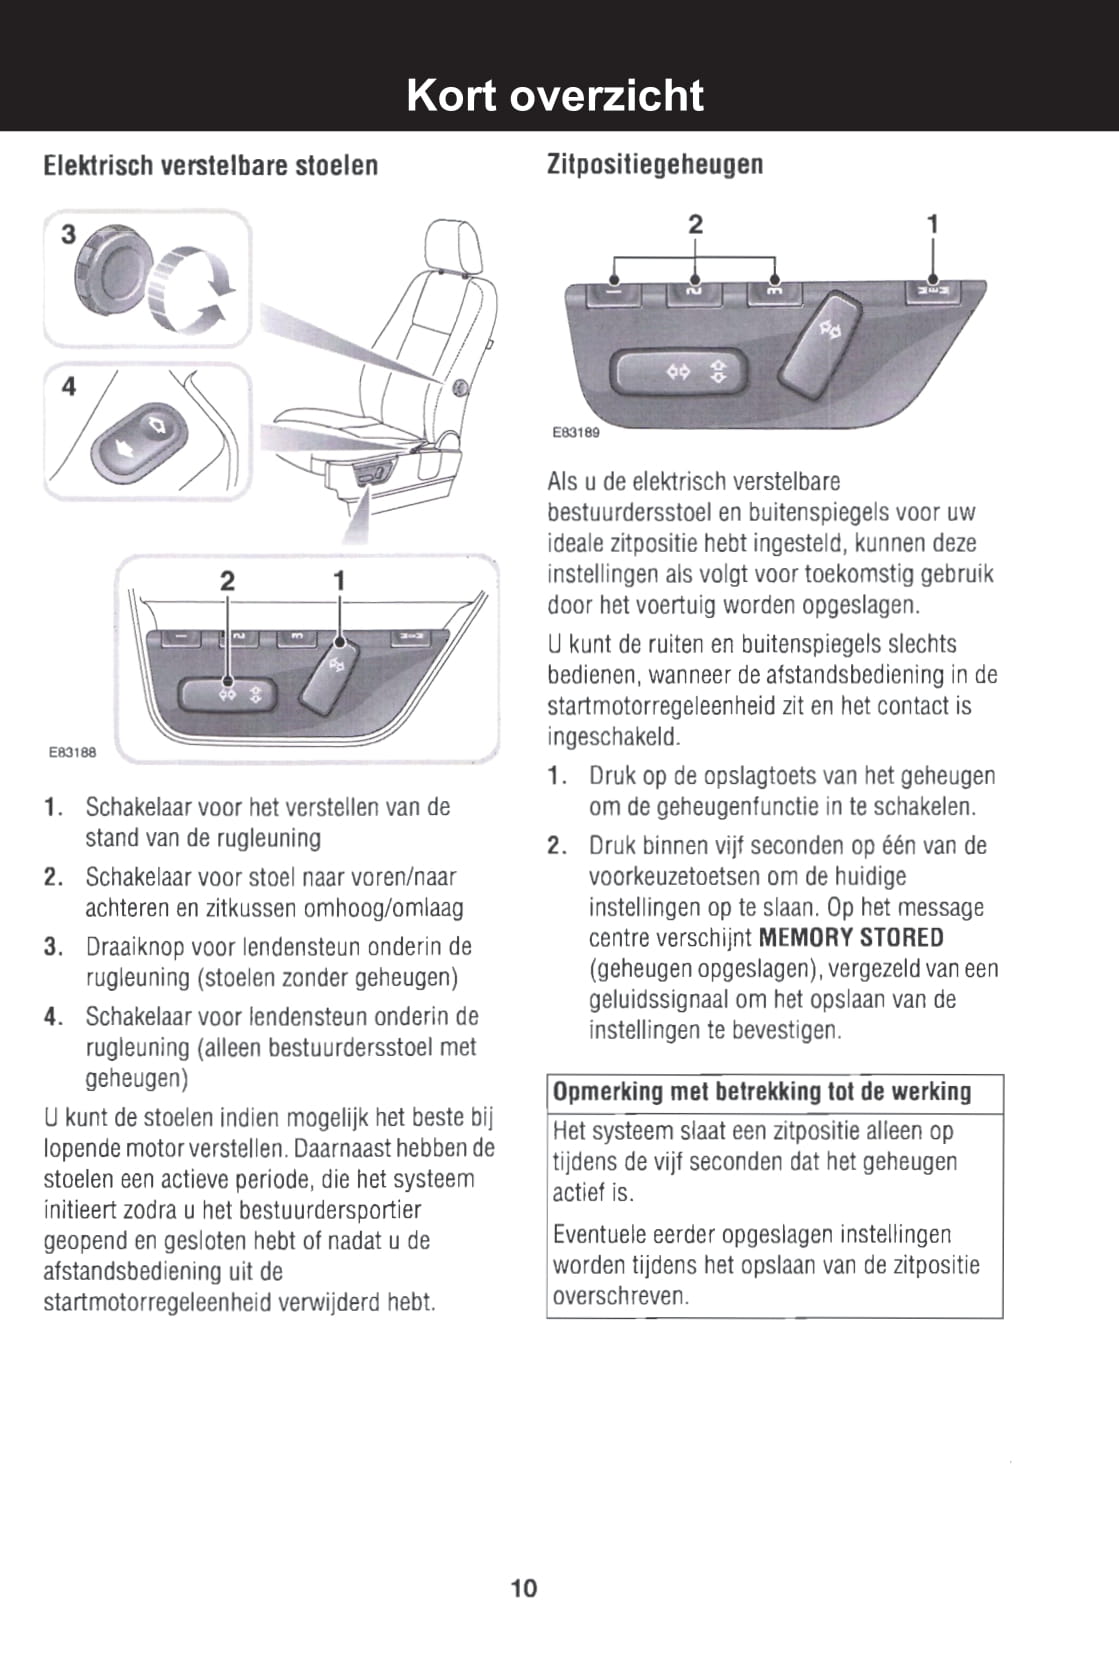 2007-2008 Land Rover Freelander 2 Gebruikershandleiding | Nederlands